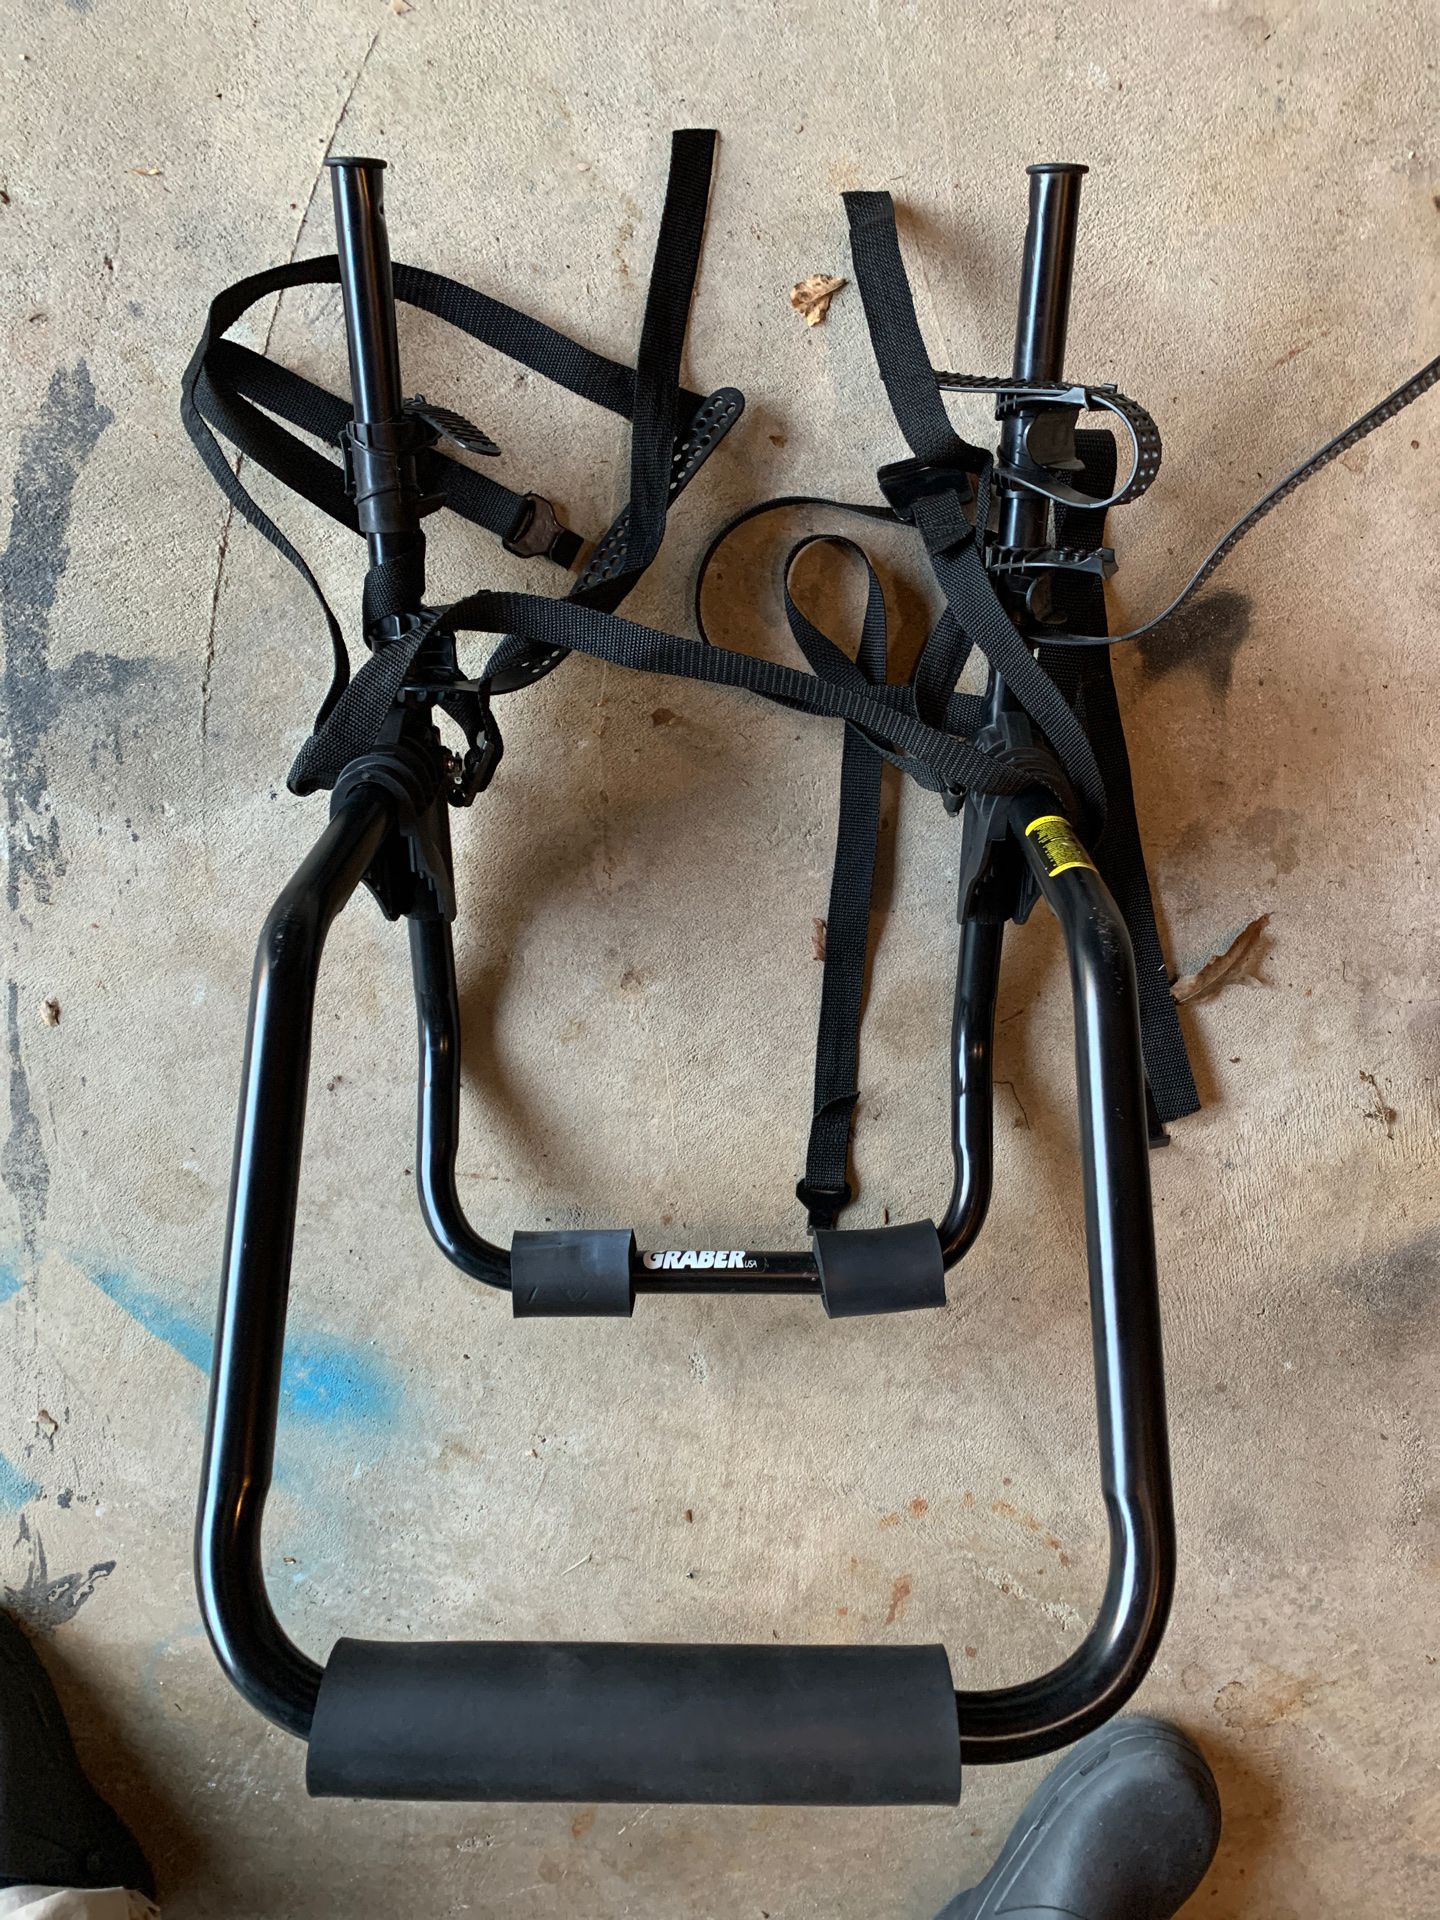 Graber two bike universal trunk mount bike rack